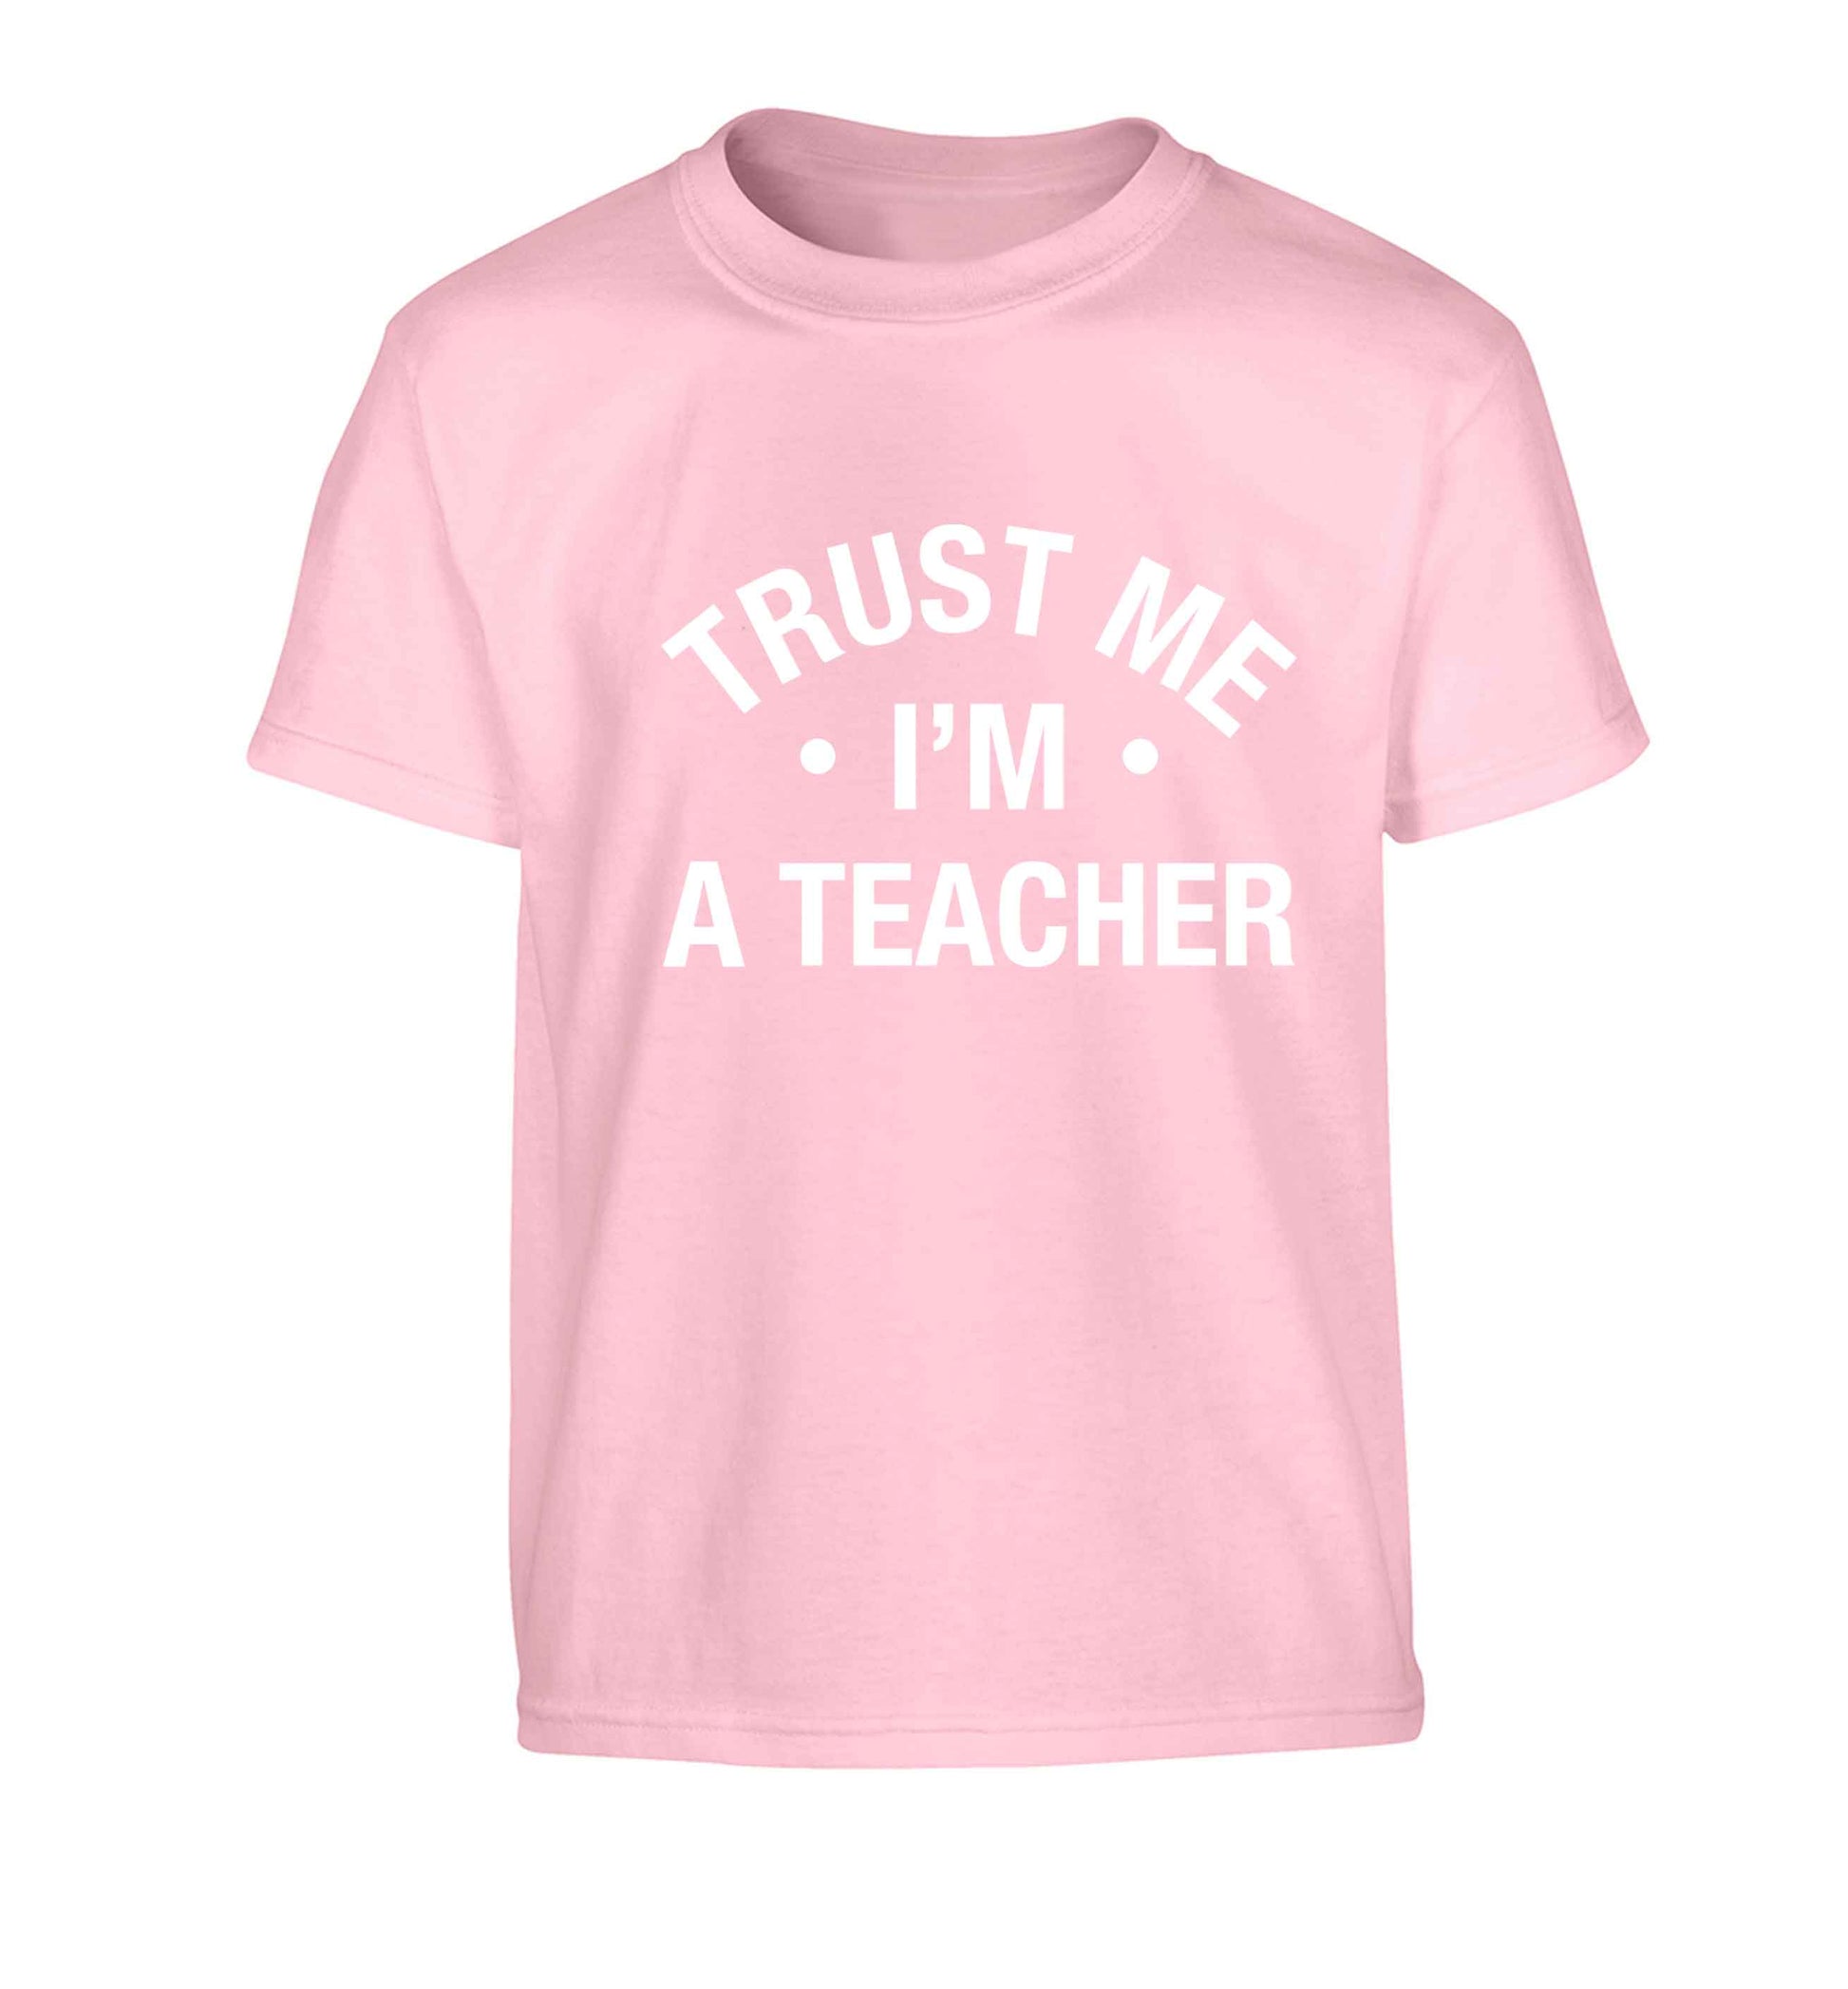 Trust me I'm a teacher Children's light pink Tshirt 12-13 Years